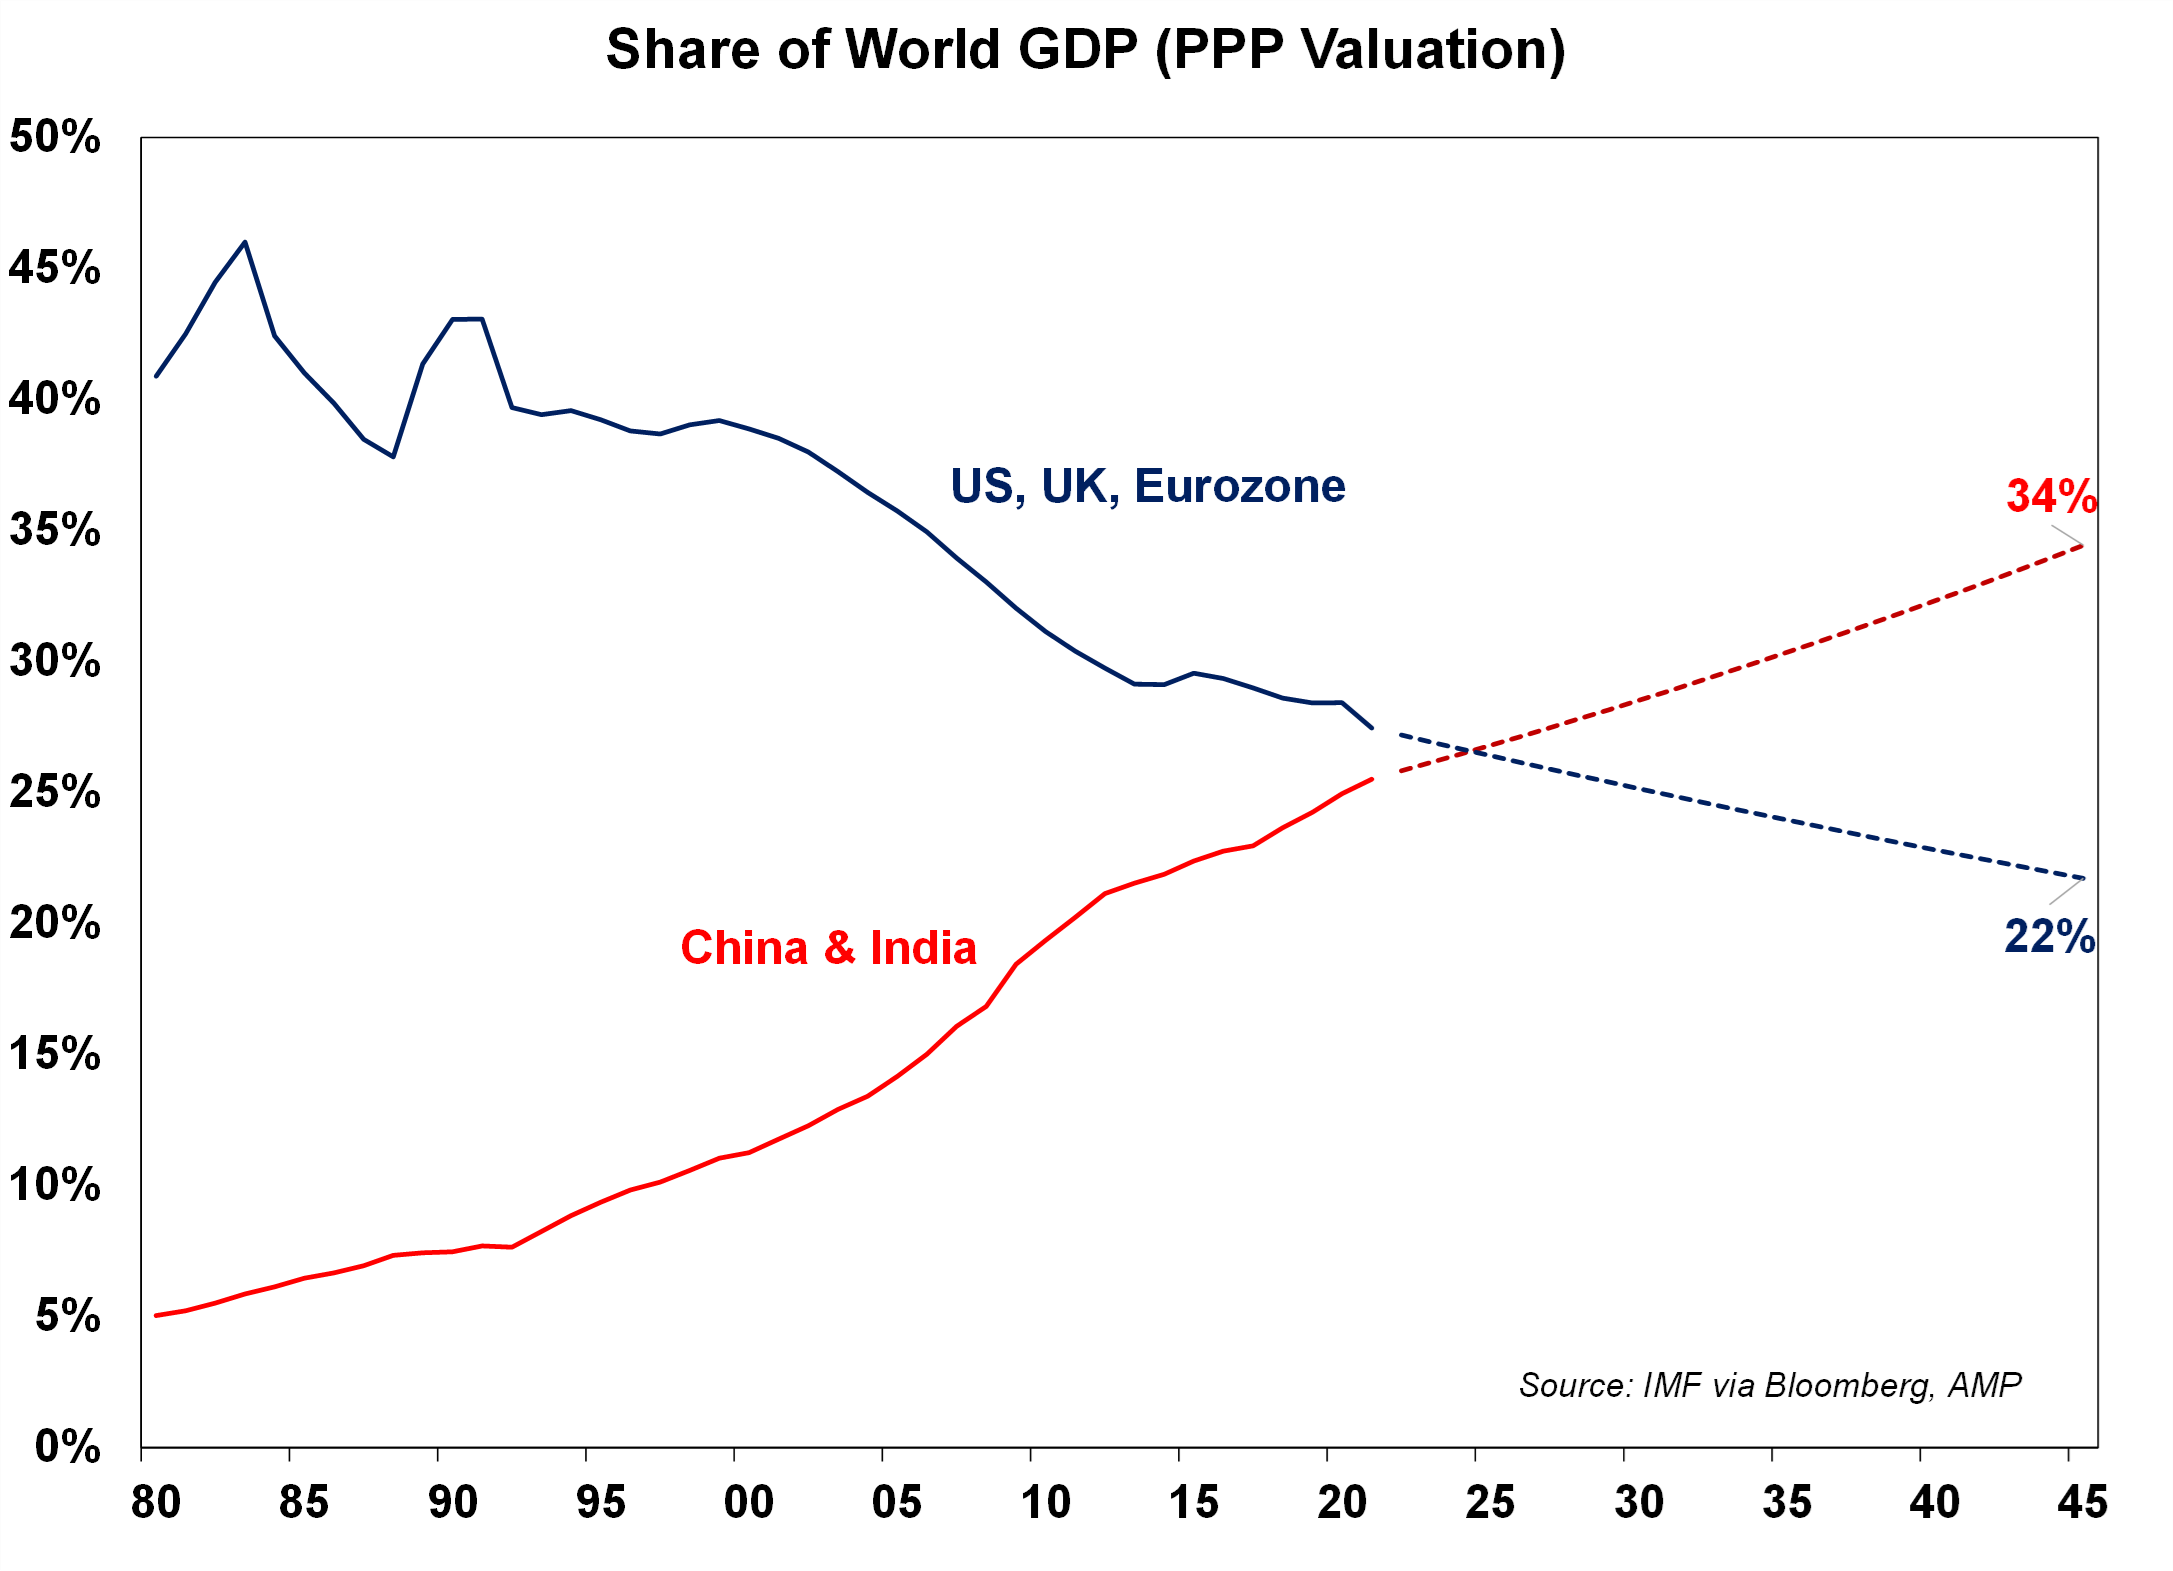 Share of World GDP